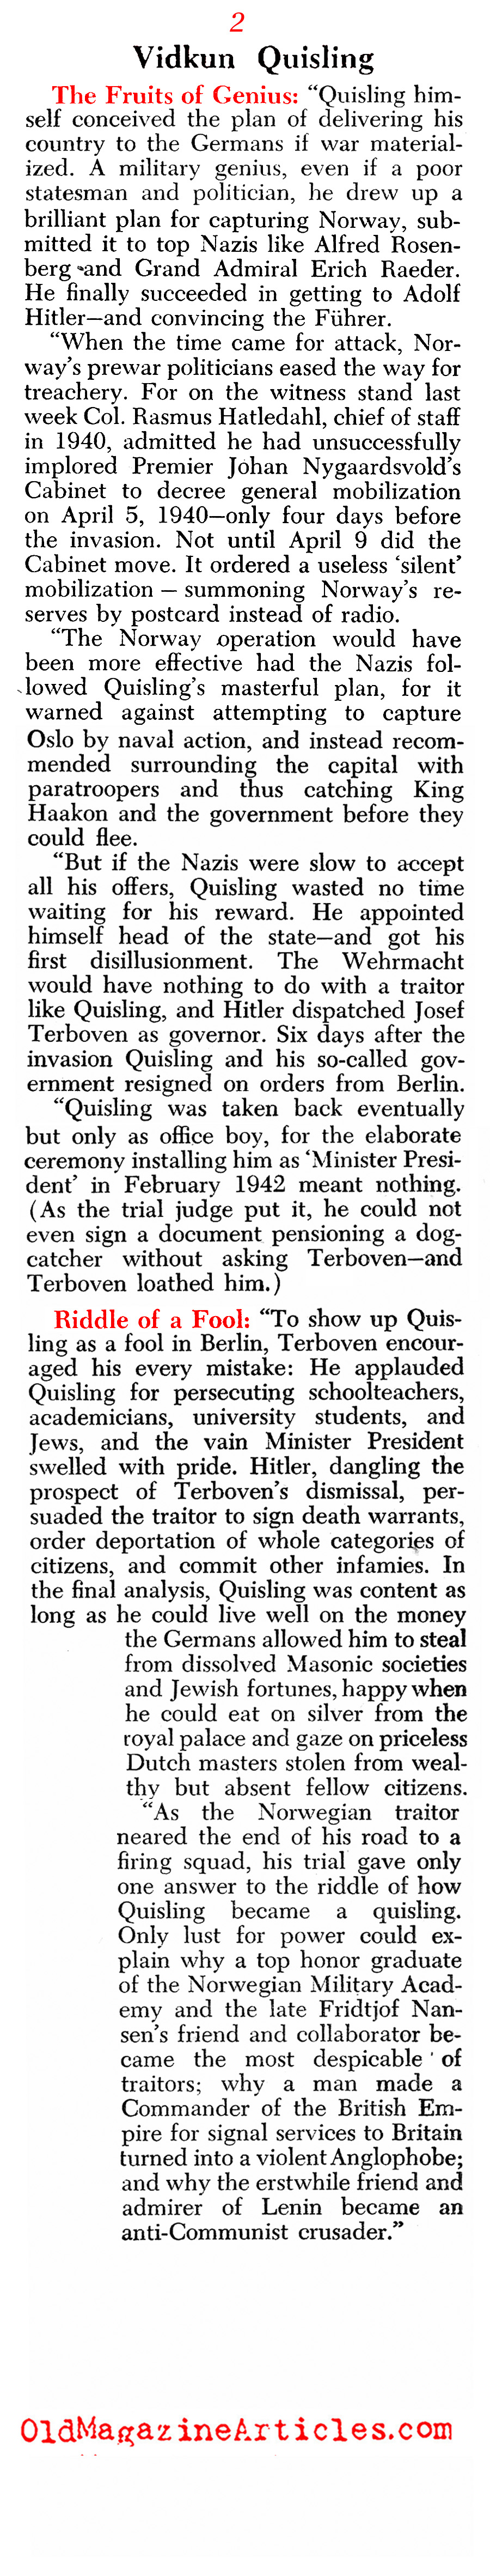 Judgment in Oslo (Newsweek Magazine, 1945)